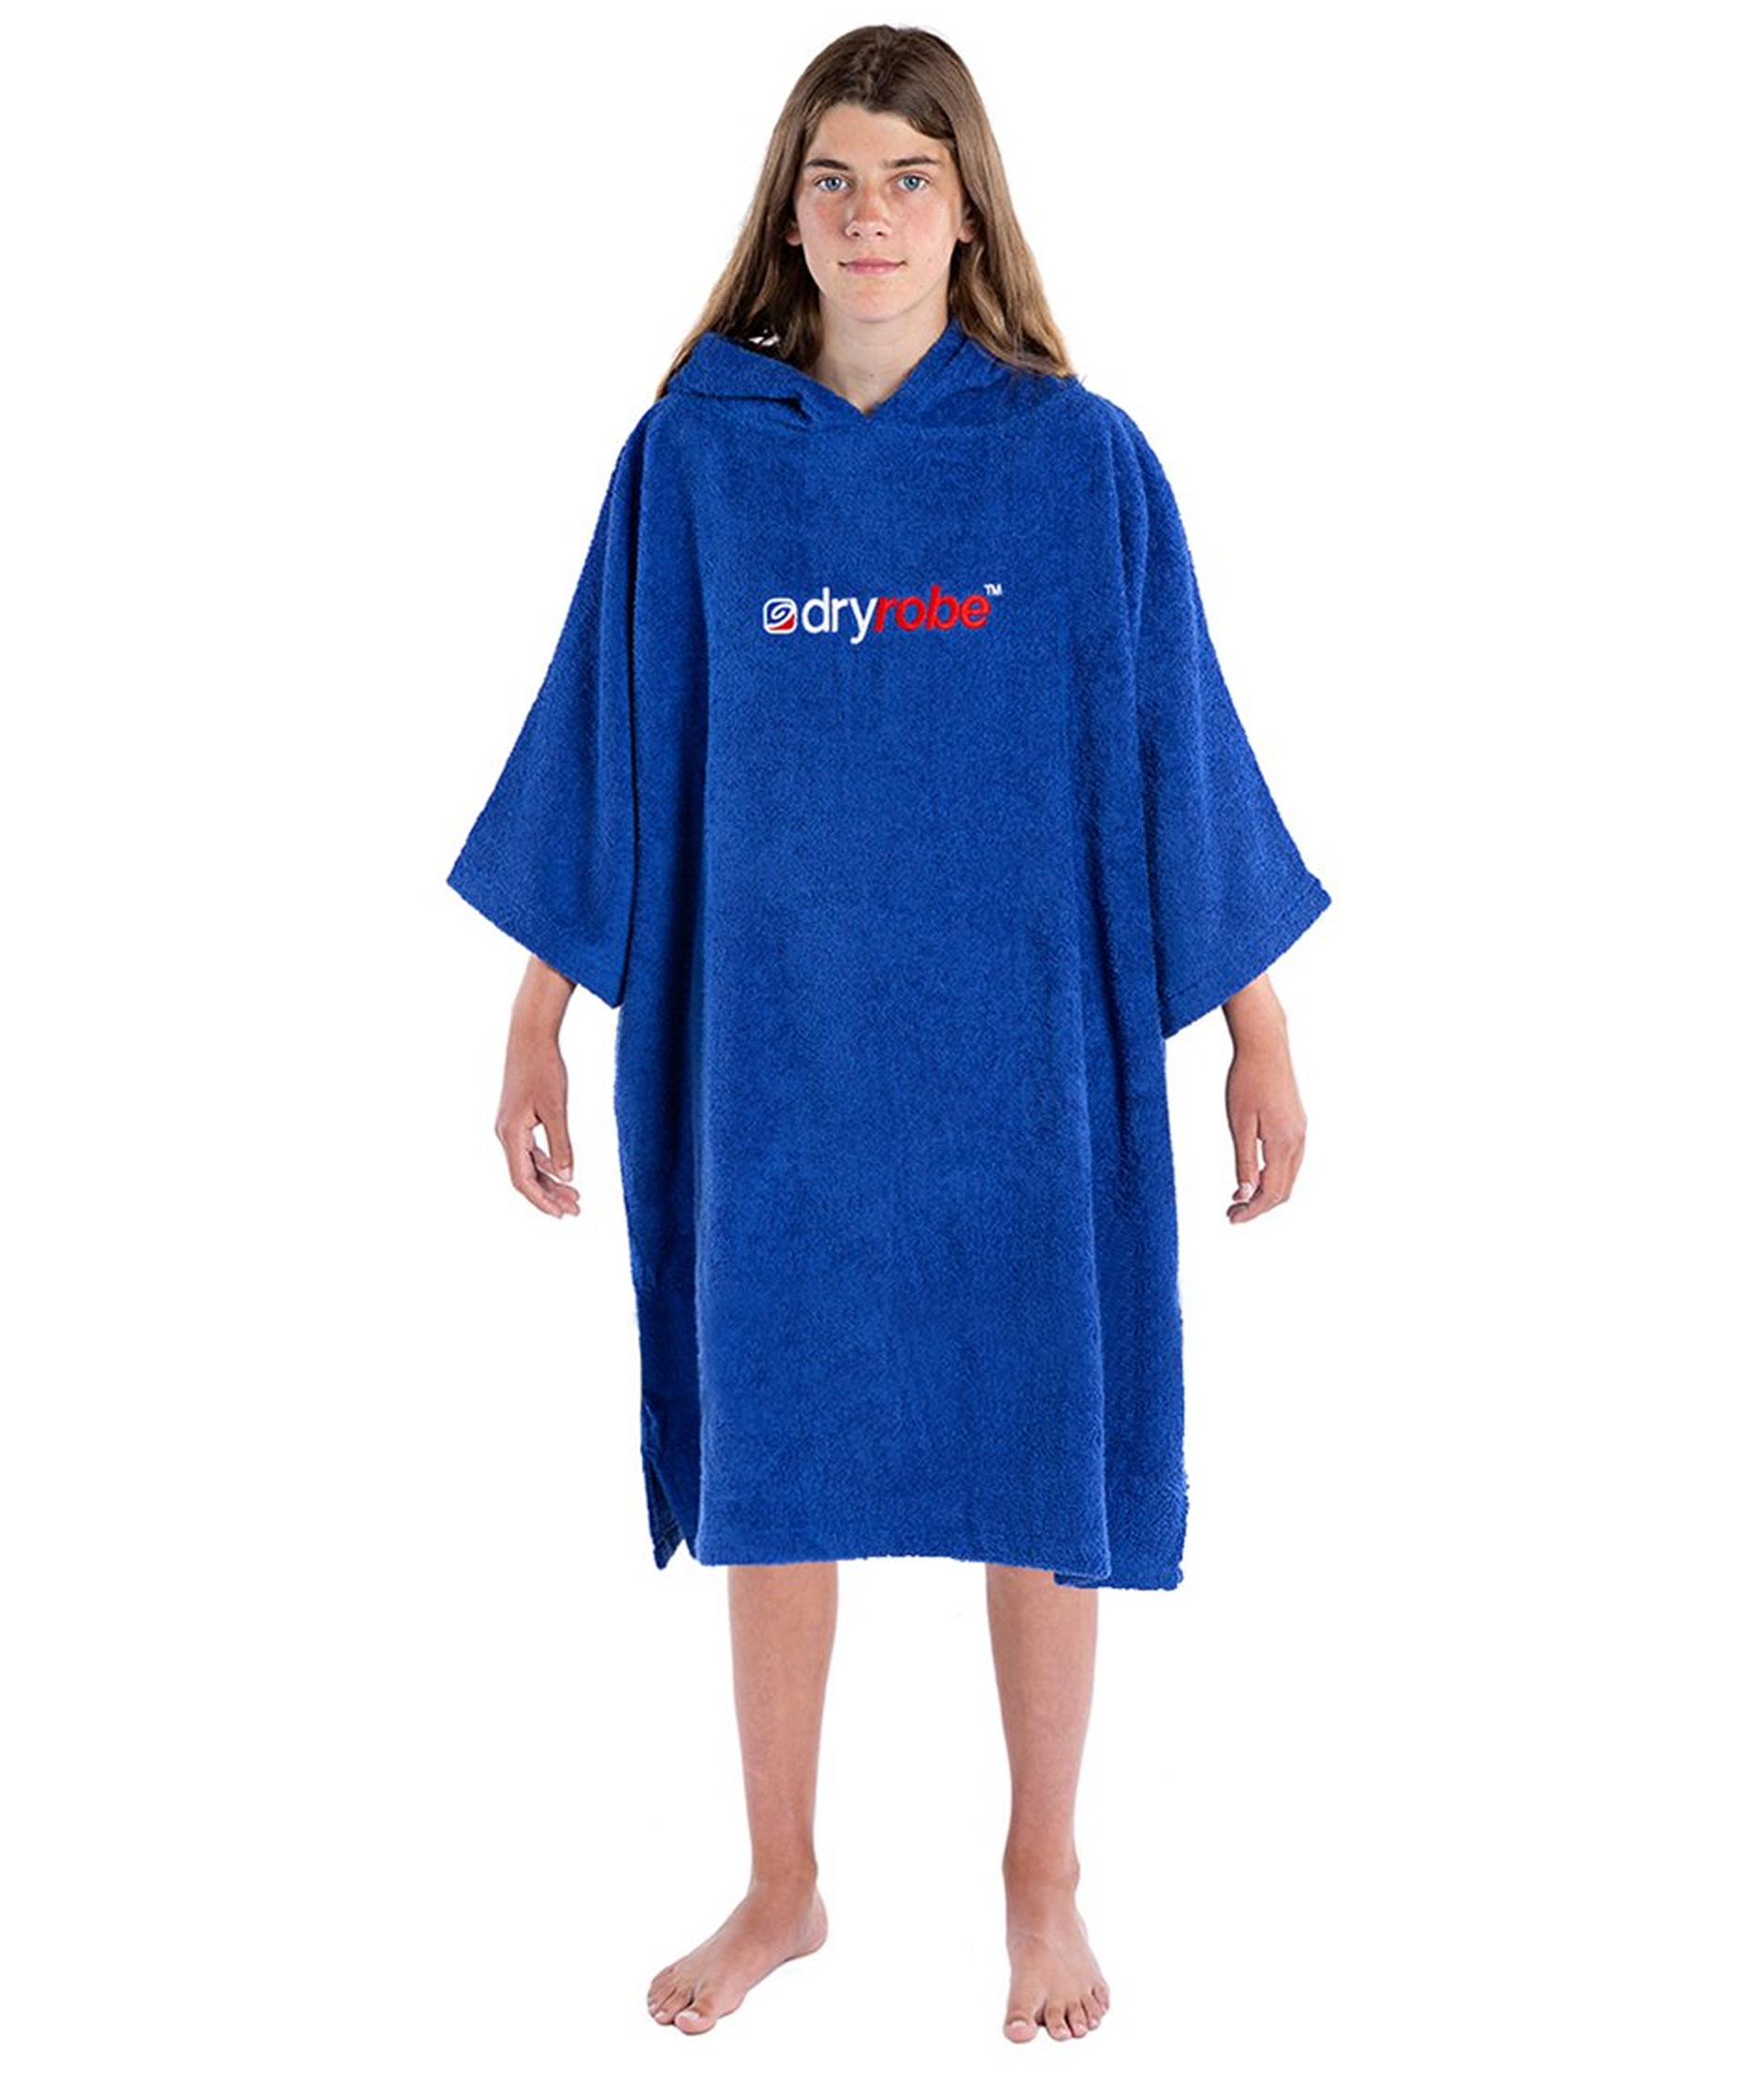 Dryrobe Short Sleeve Towel - Small(10-13yrs)